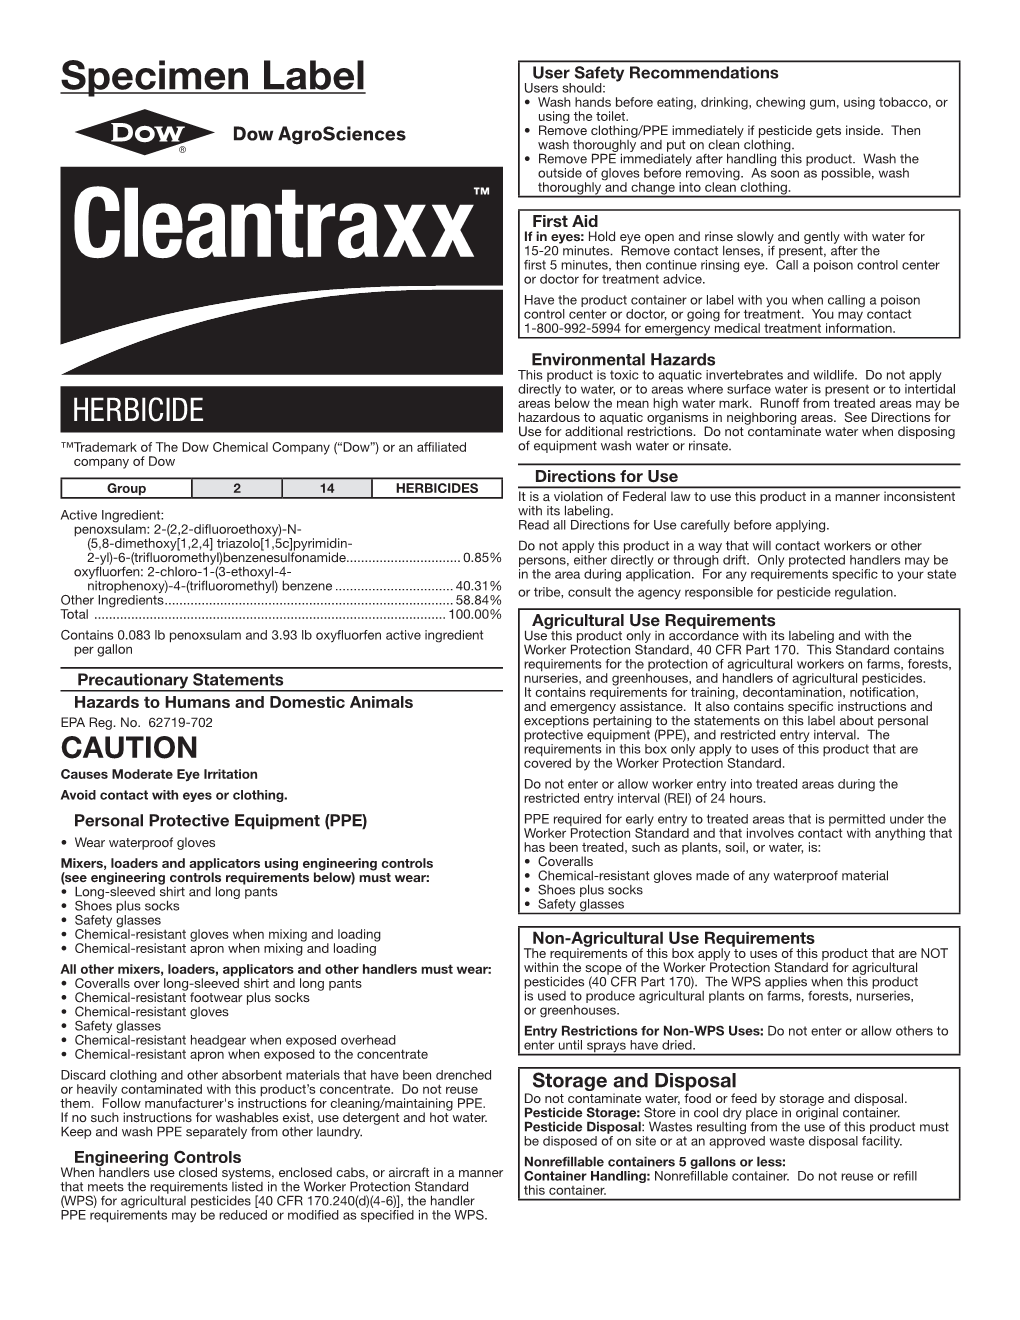 Cleantraxx Label